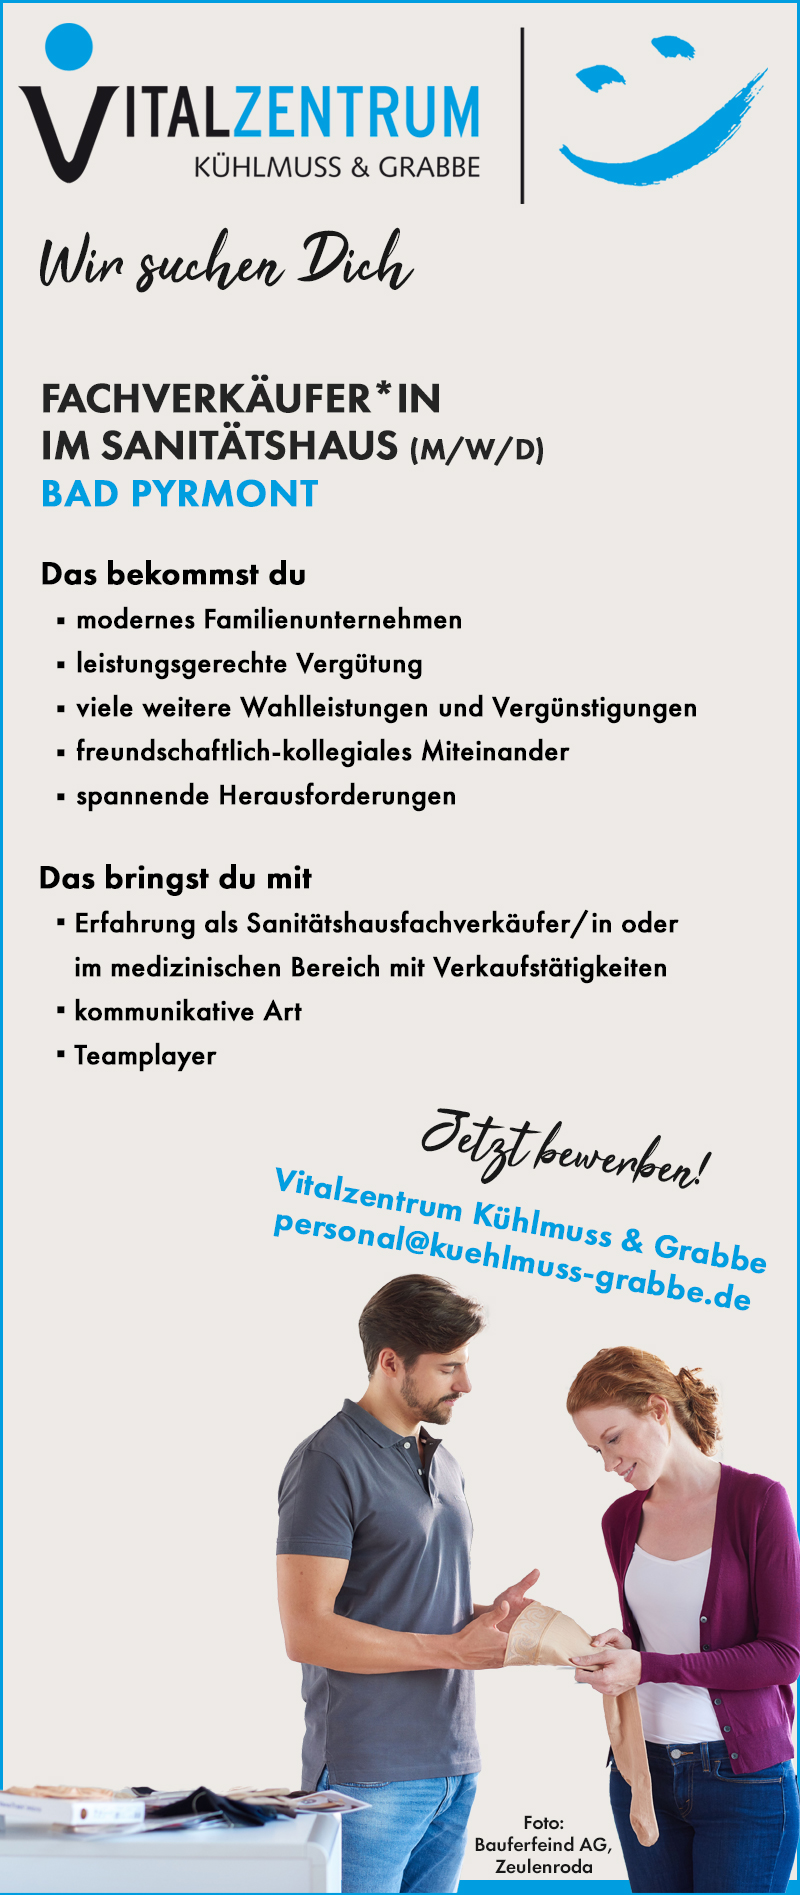 Fachverkäufer*in im Sanitätshaus (m/w/d) - Vitalzentrum Kühlmuss & Grabbe GmbH